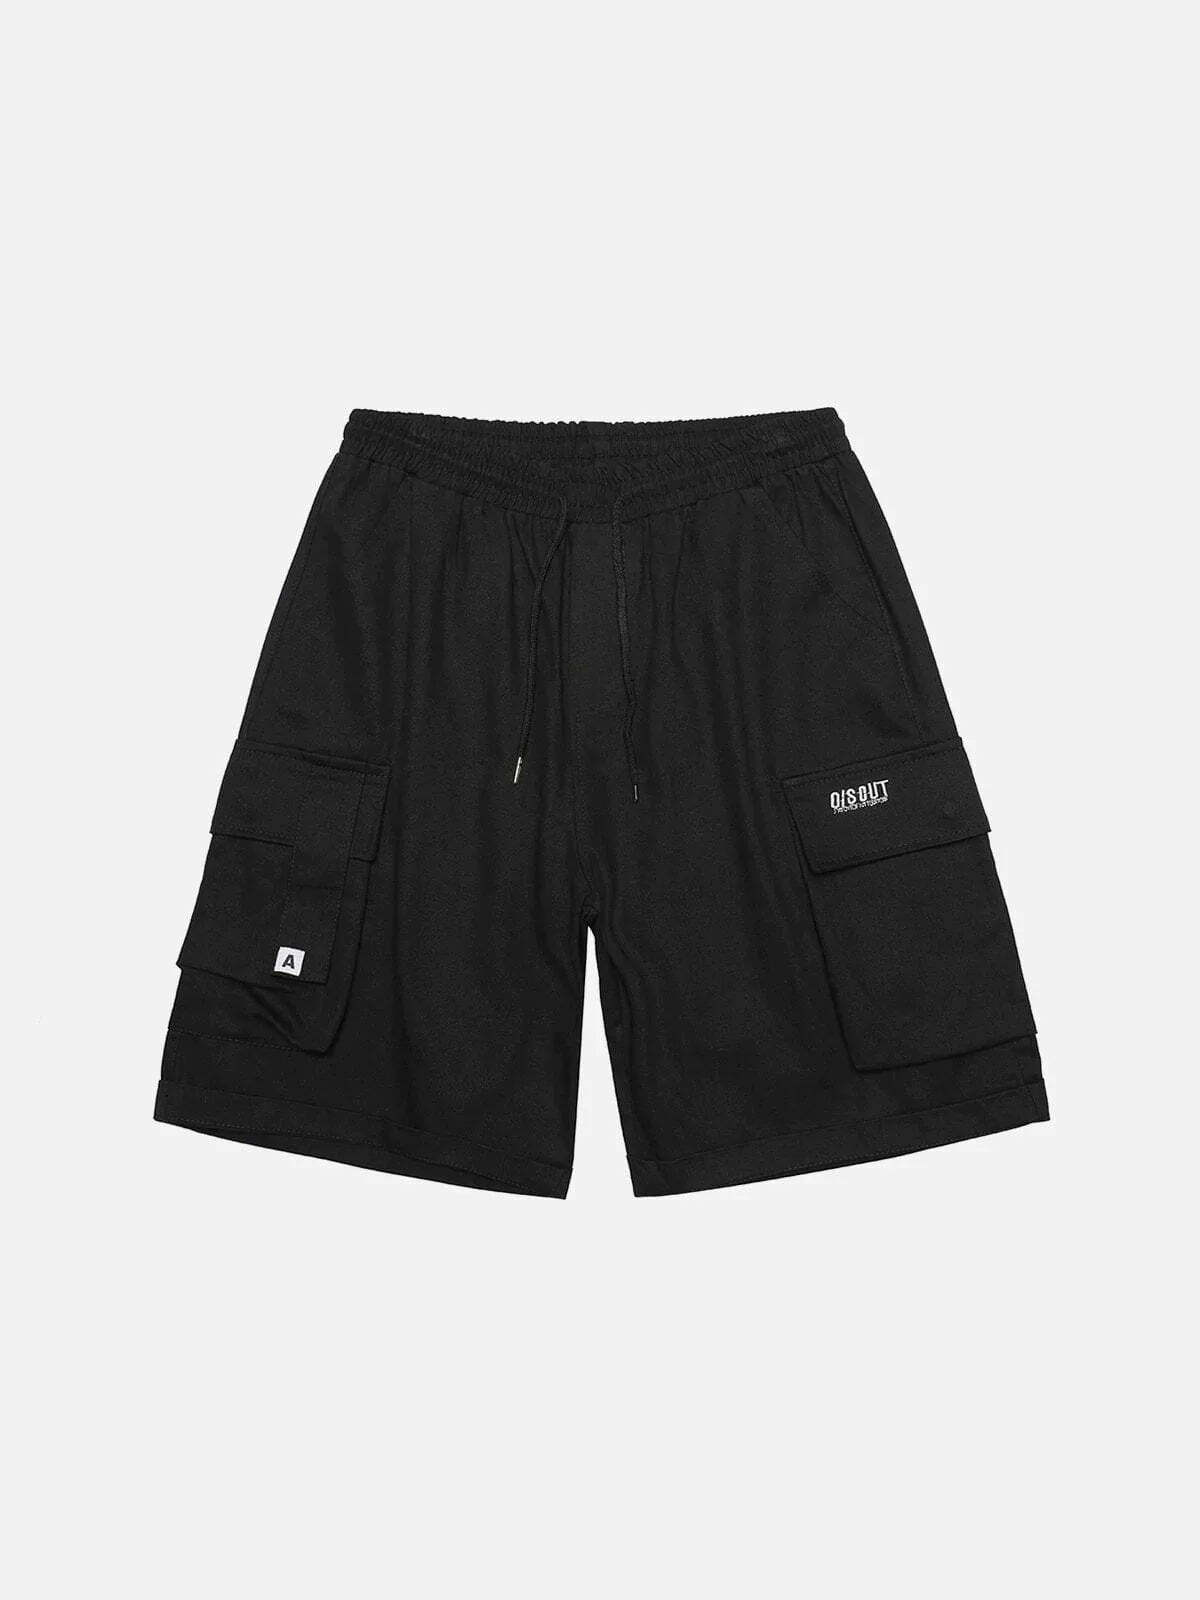 discreet side pocket shorts urban functional essential 4773